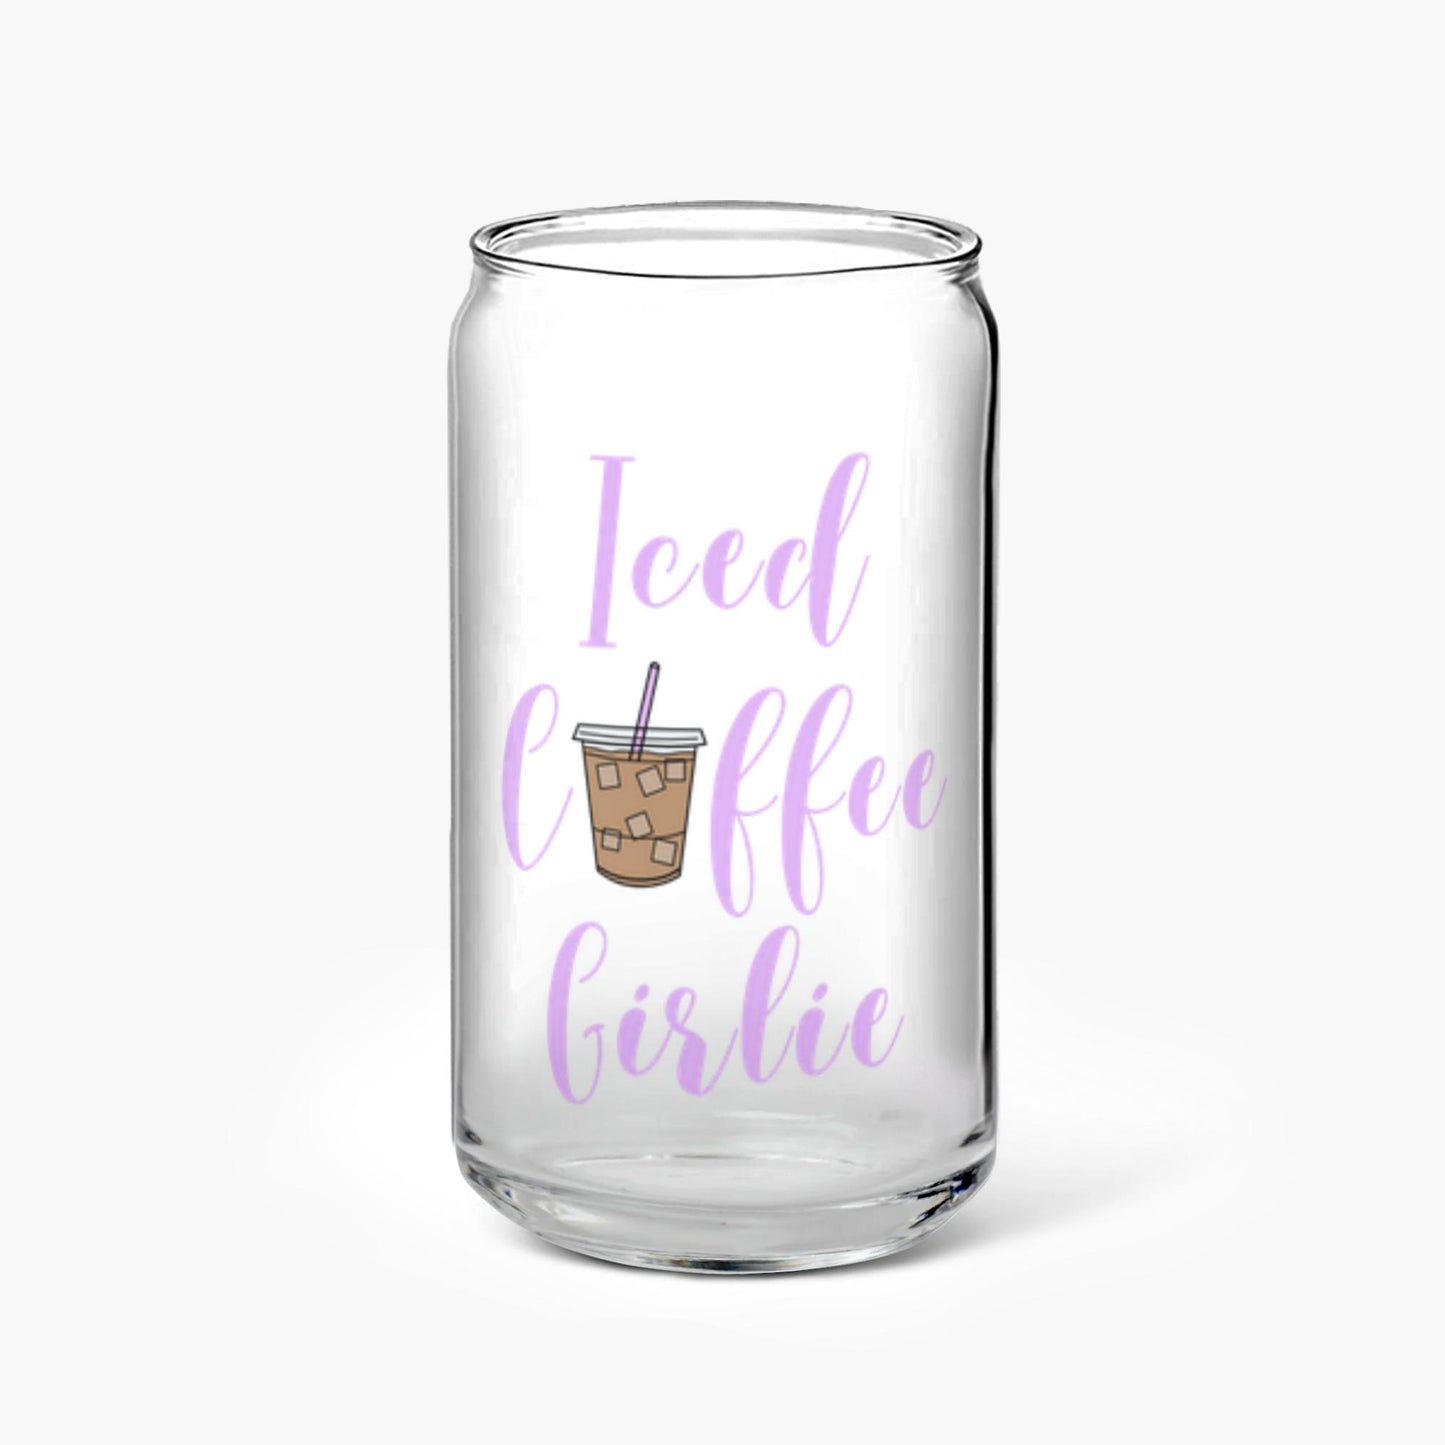 Iced Coffee Girlie Glass Tumbler